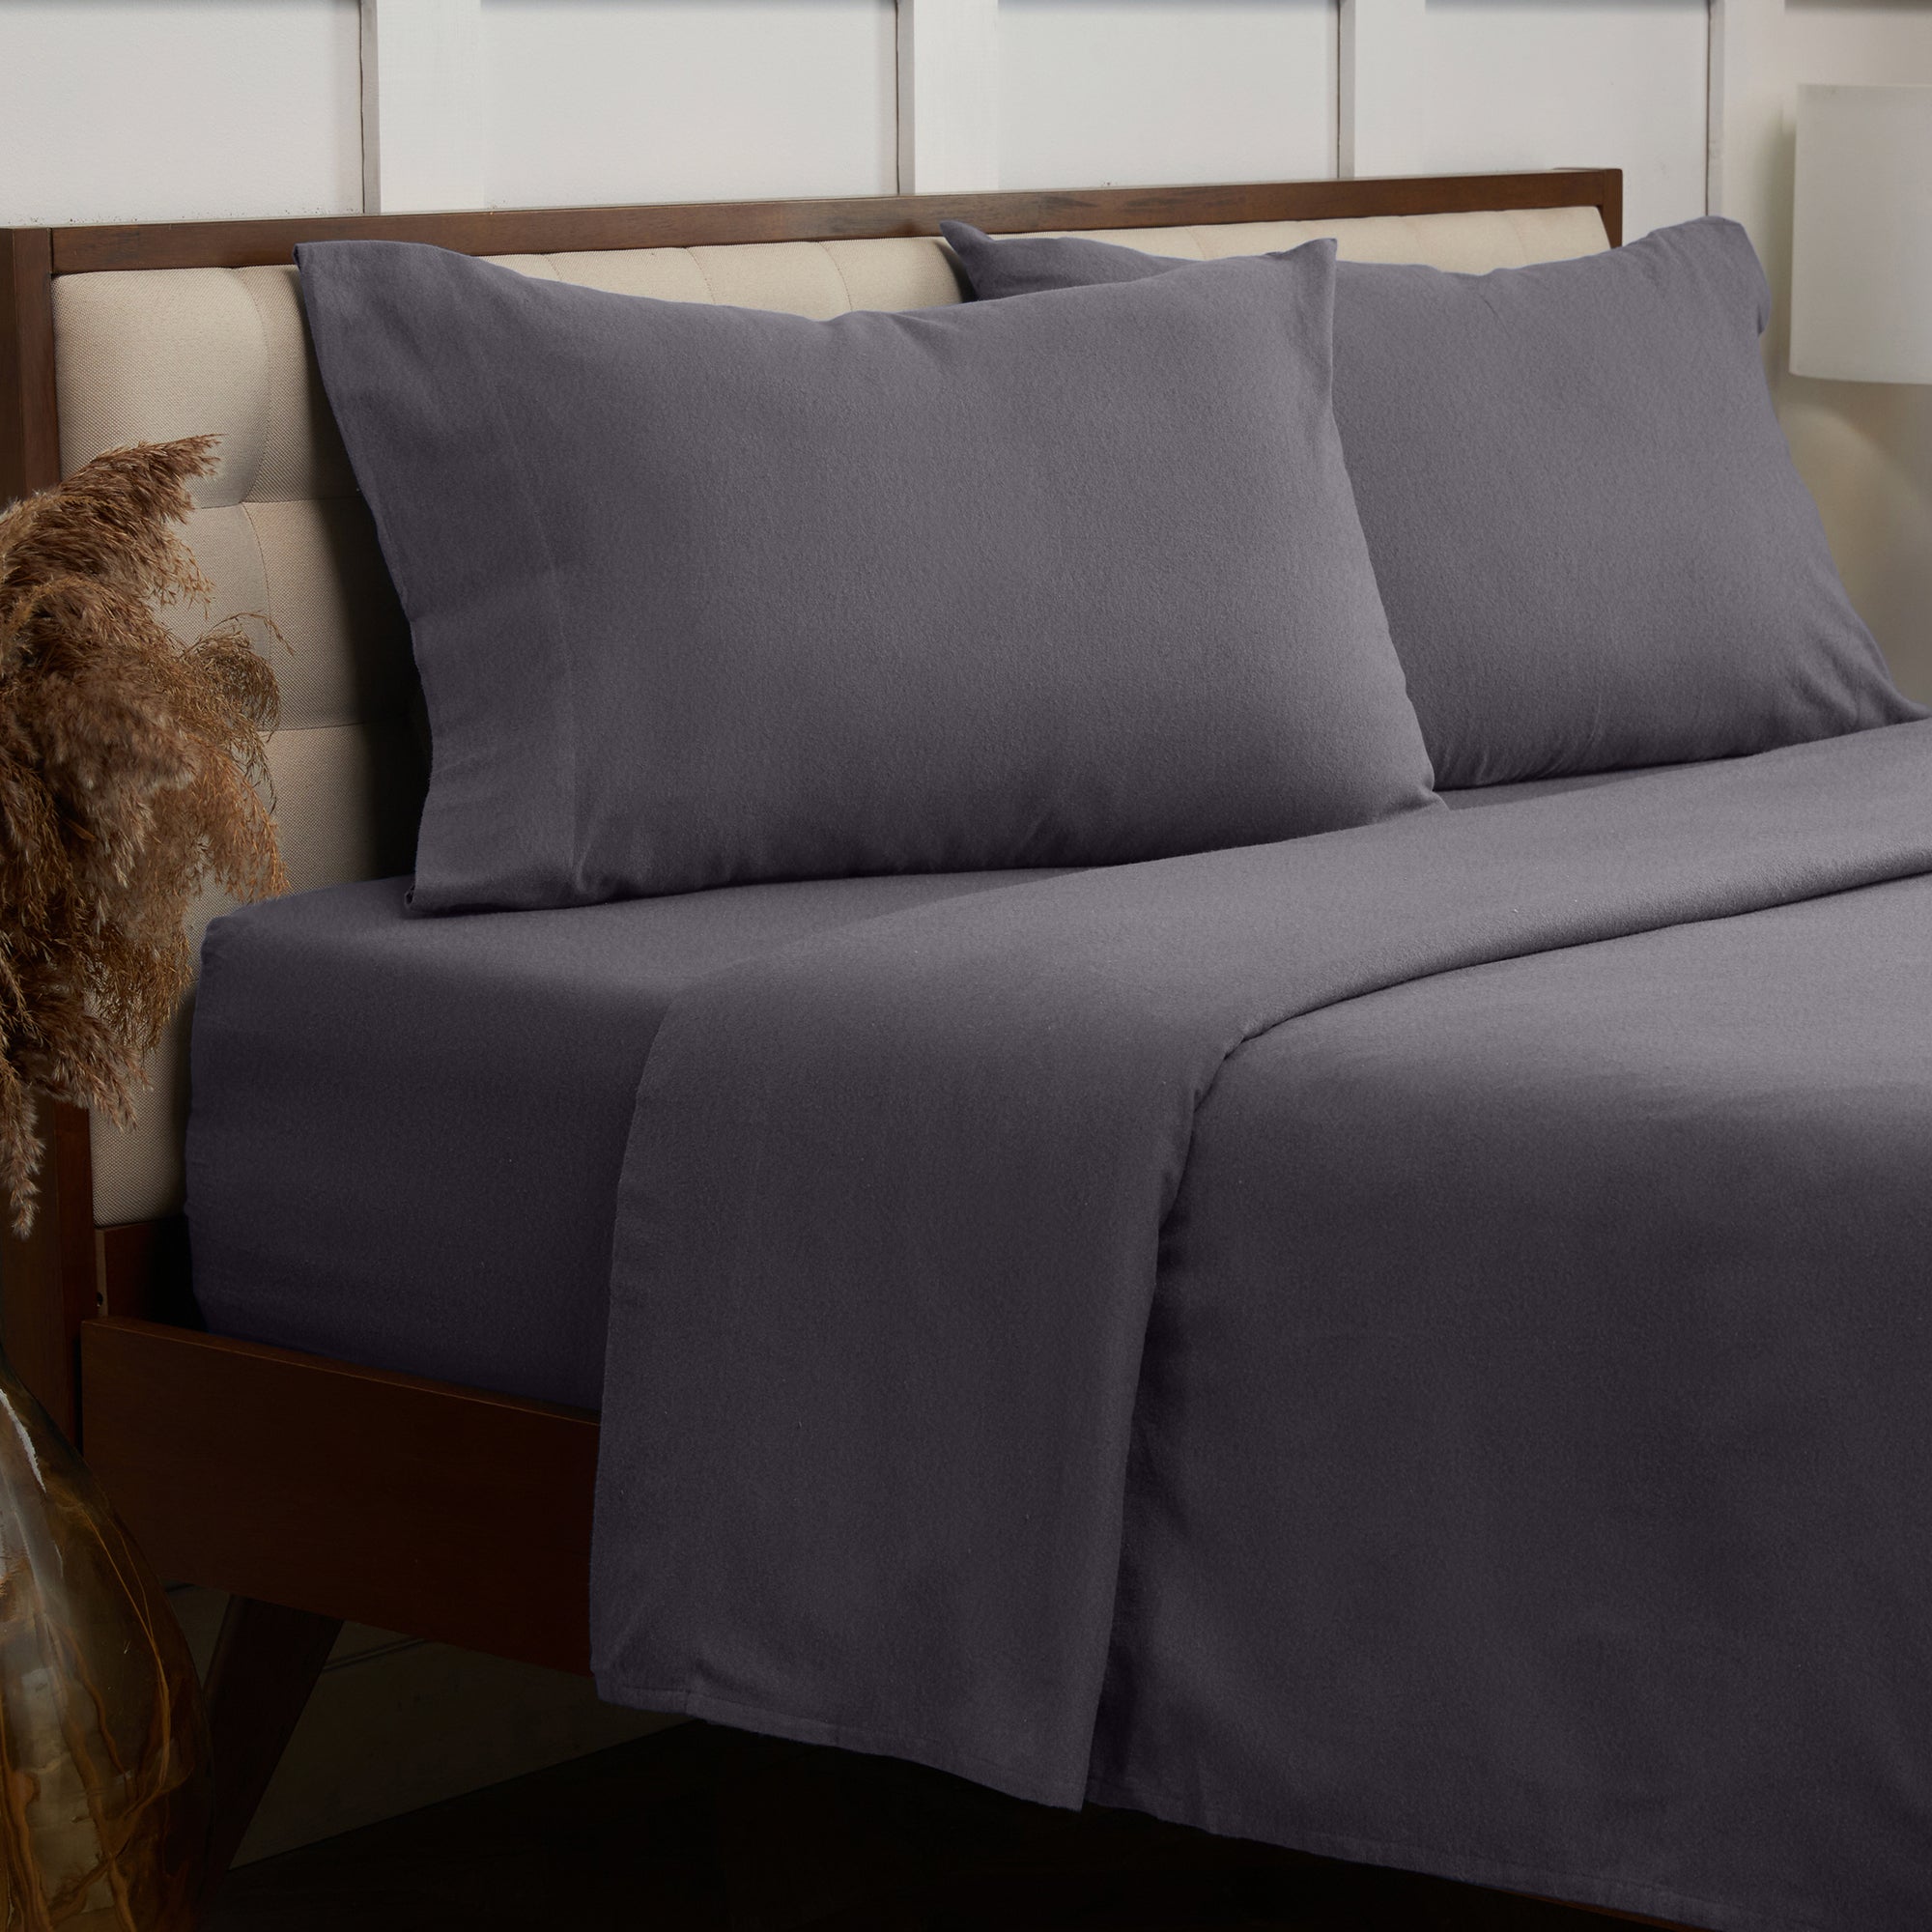 Mellanni Cotton Flannel 4 Piece Sheet Set, Lightweight Deep Pocket Bed Sheets, Queen, Gray - image 1 of 6